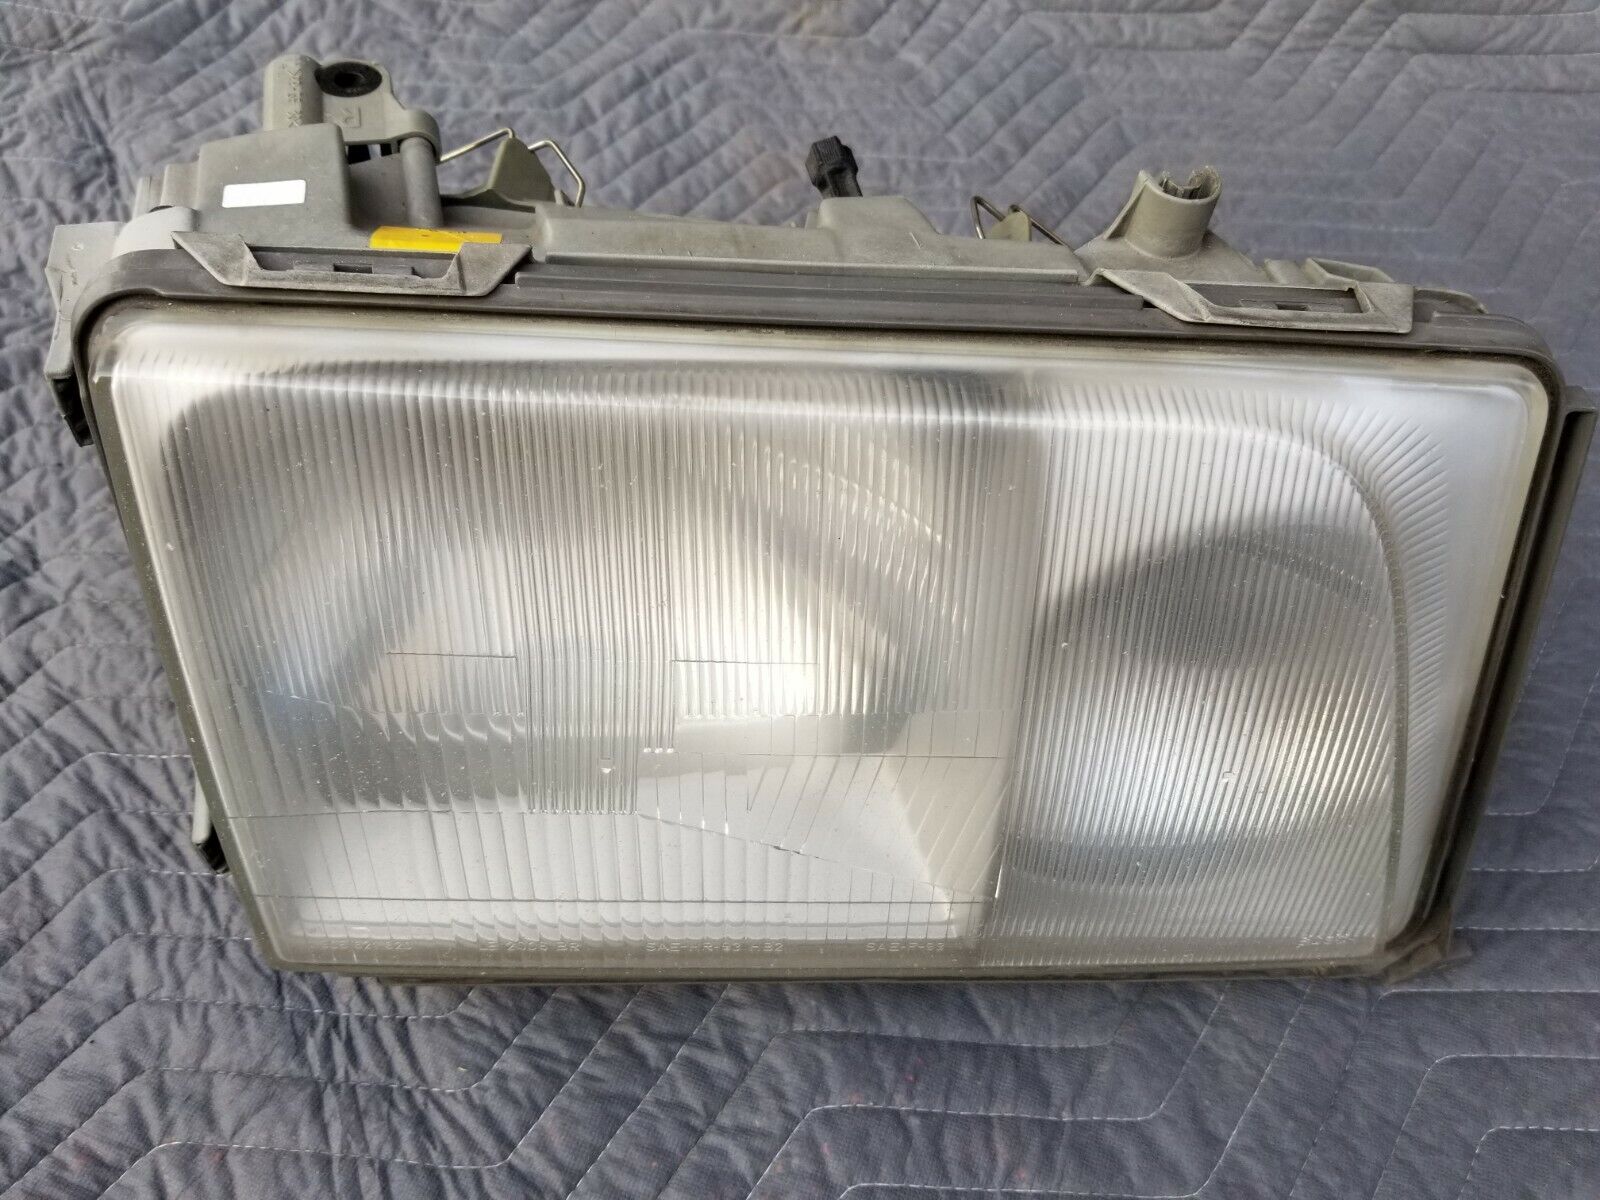 1995 MercedesBenz E420: High Beam Headlights Only – Bulb Replacement Required?